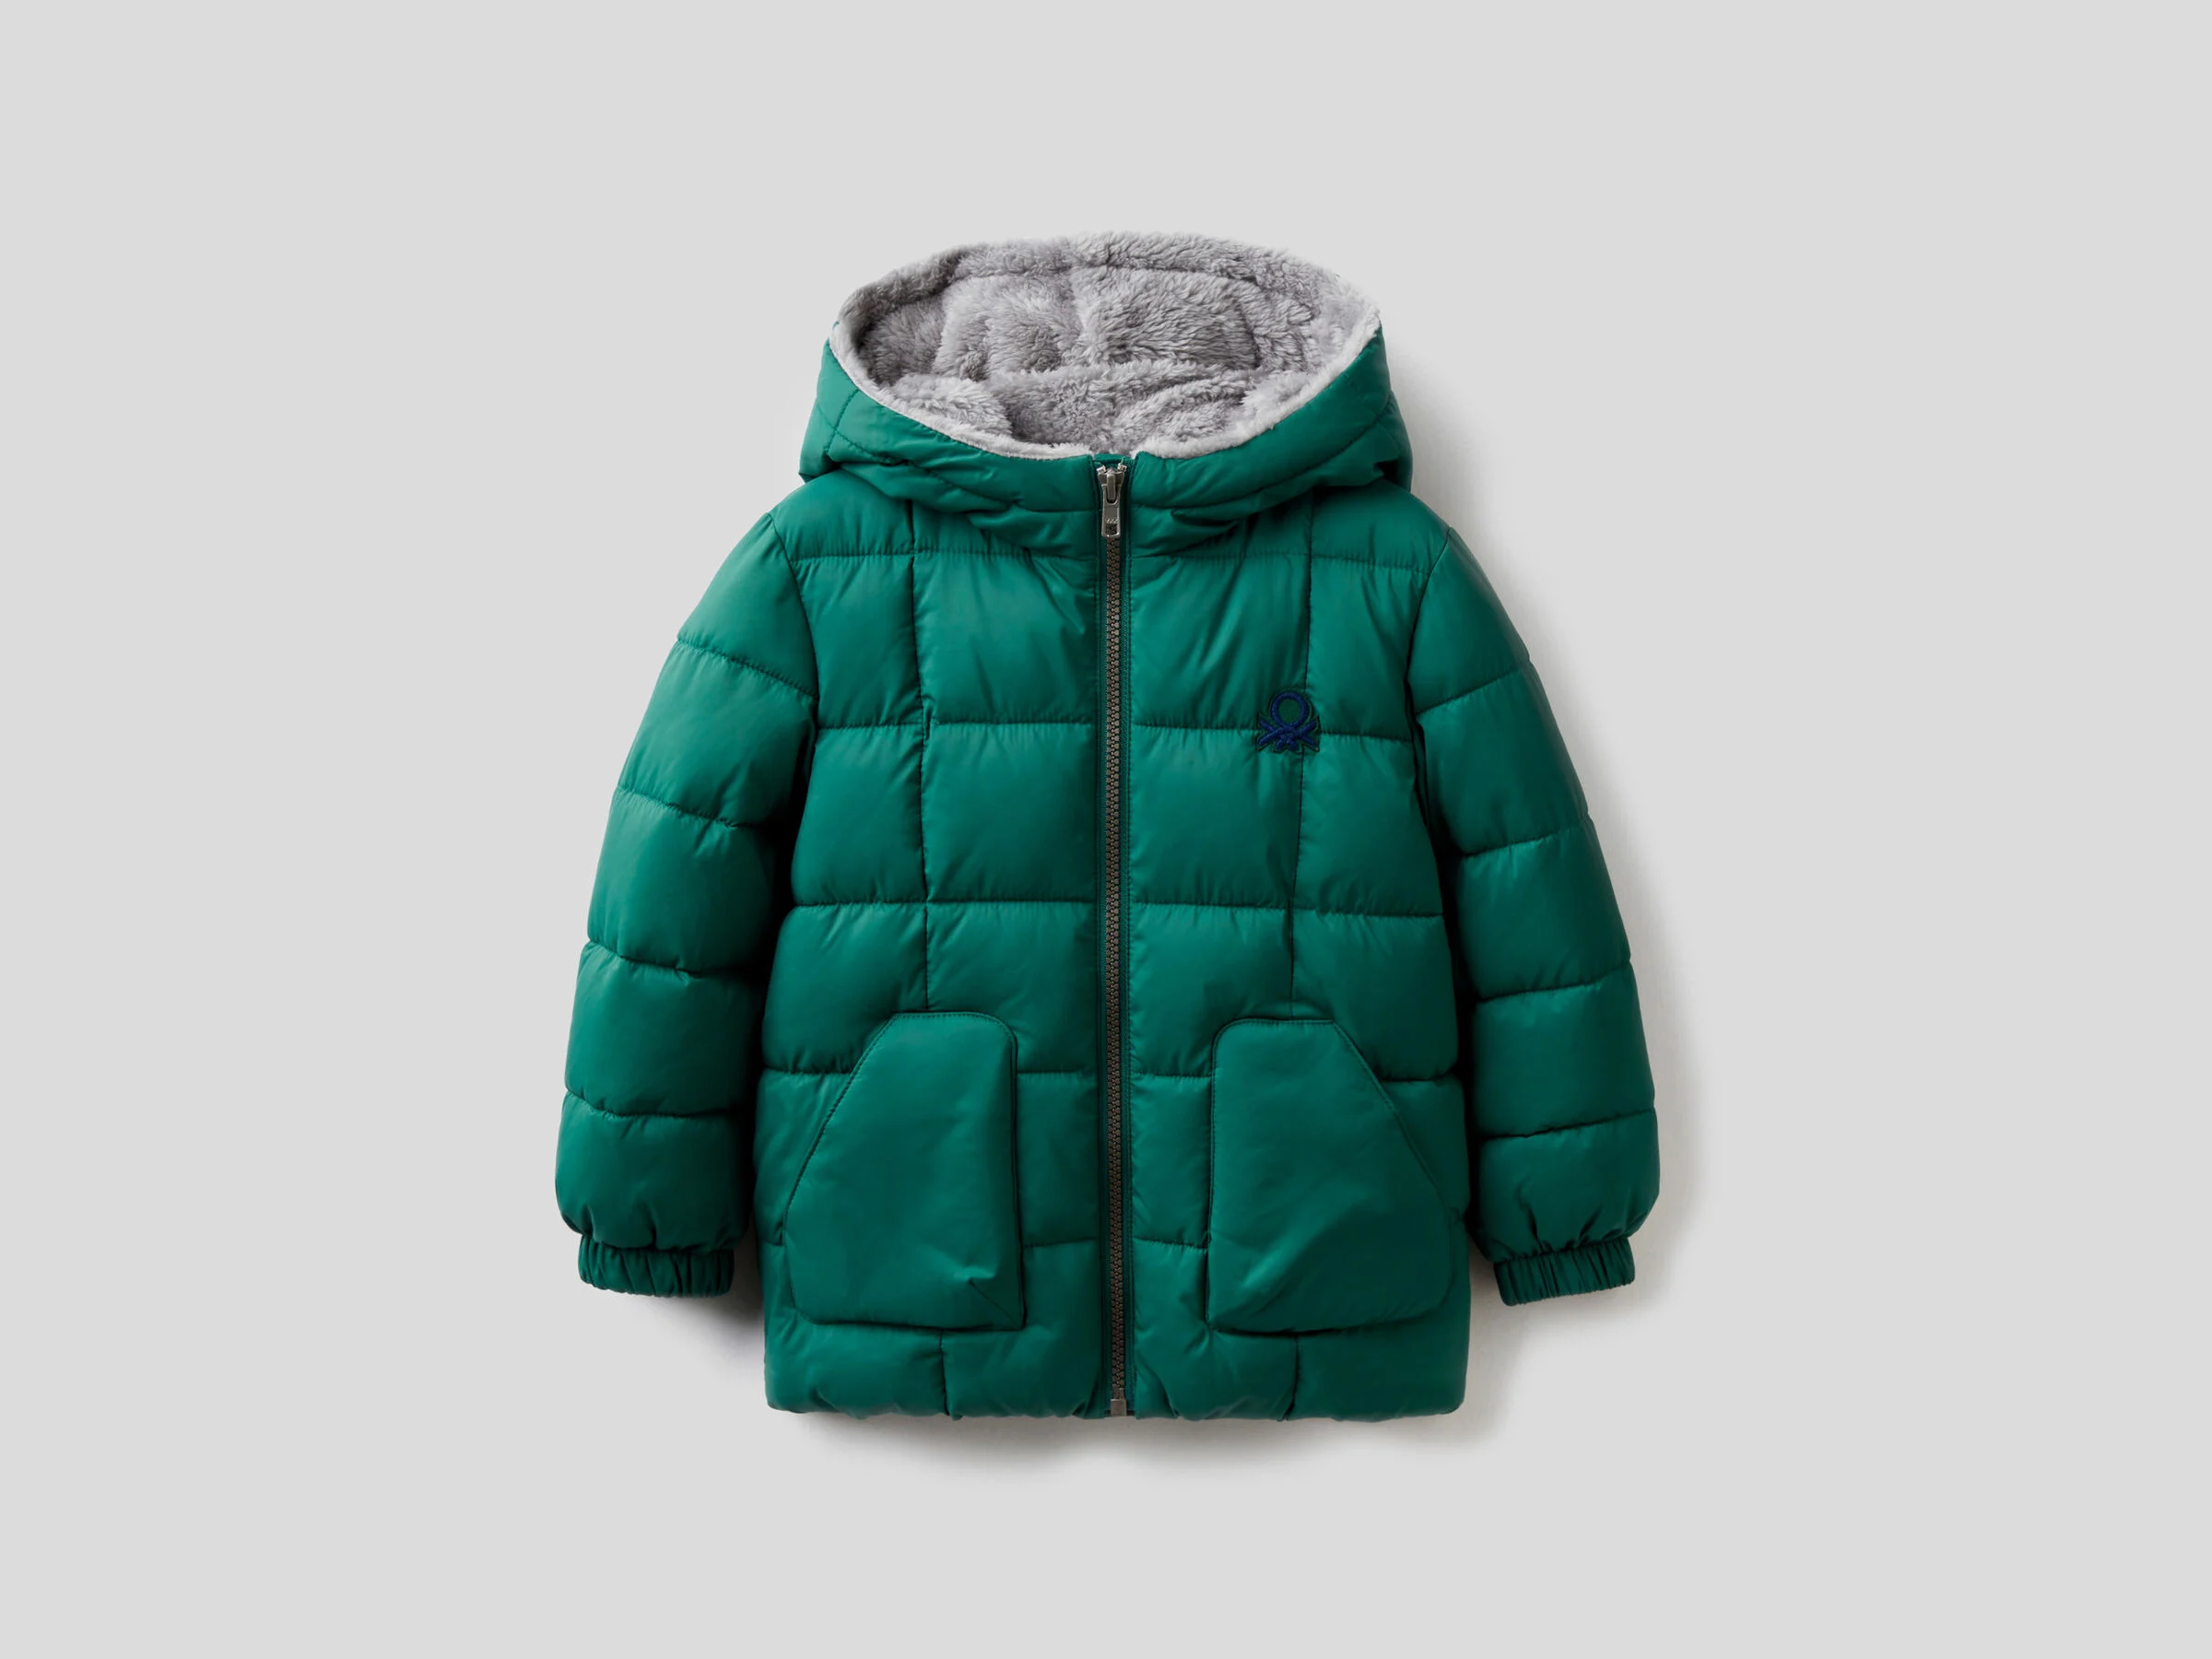 Kids's winter jacket